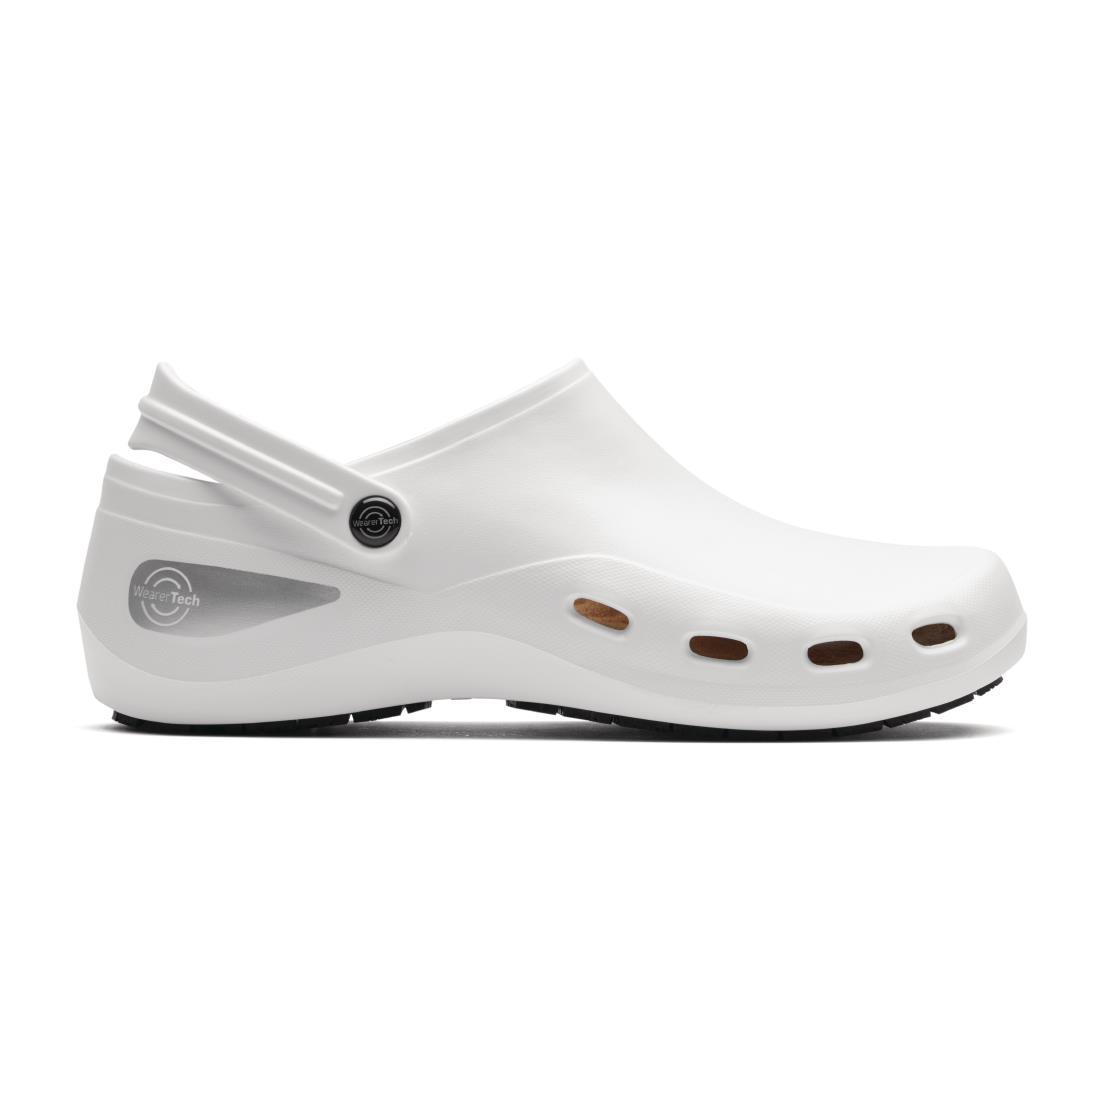 WearerTech Unisex Invigorate White Safety Shoe Size 6 - BB199-39.5  - 4